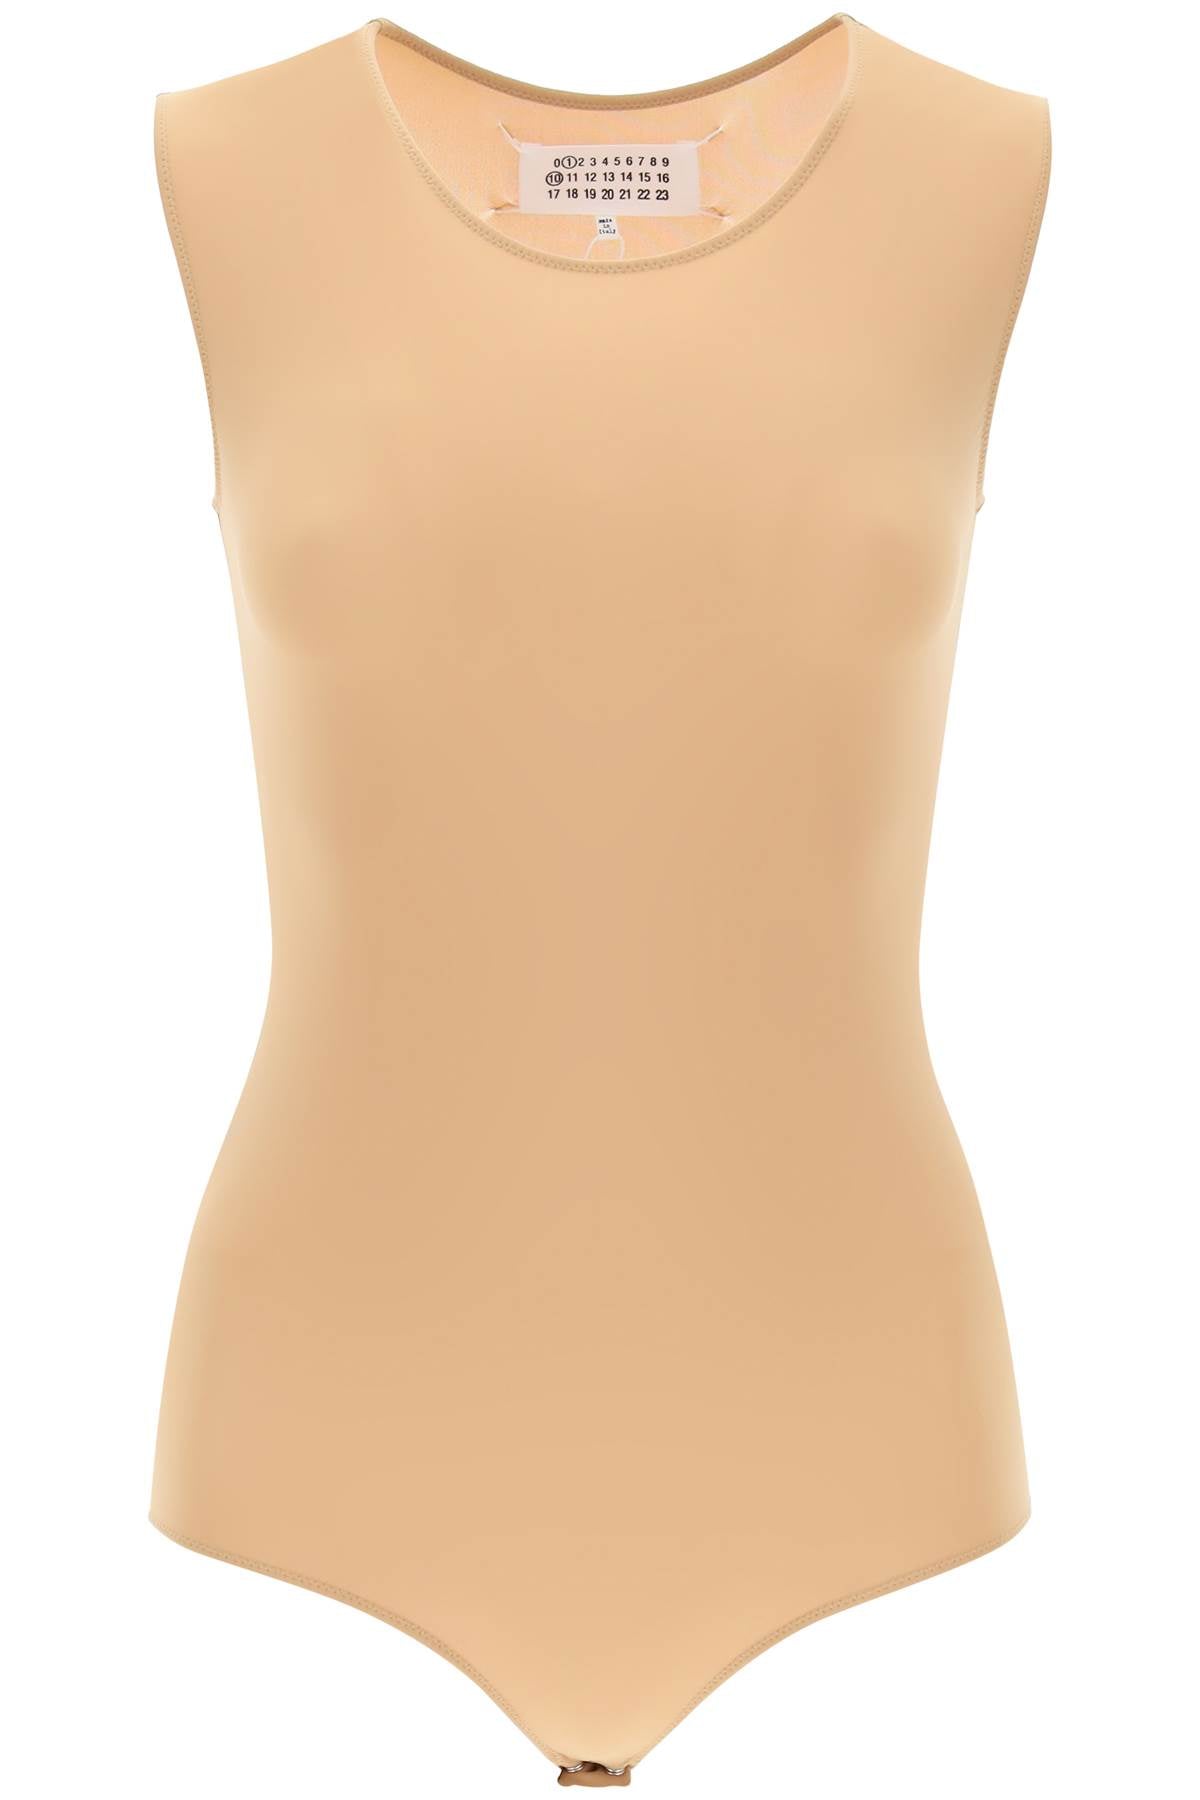 Maison margiela second skin sleeveless lycra bodysuit-0